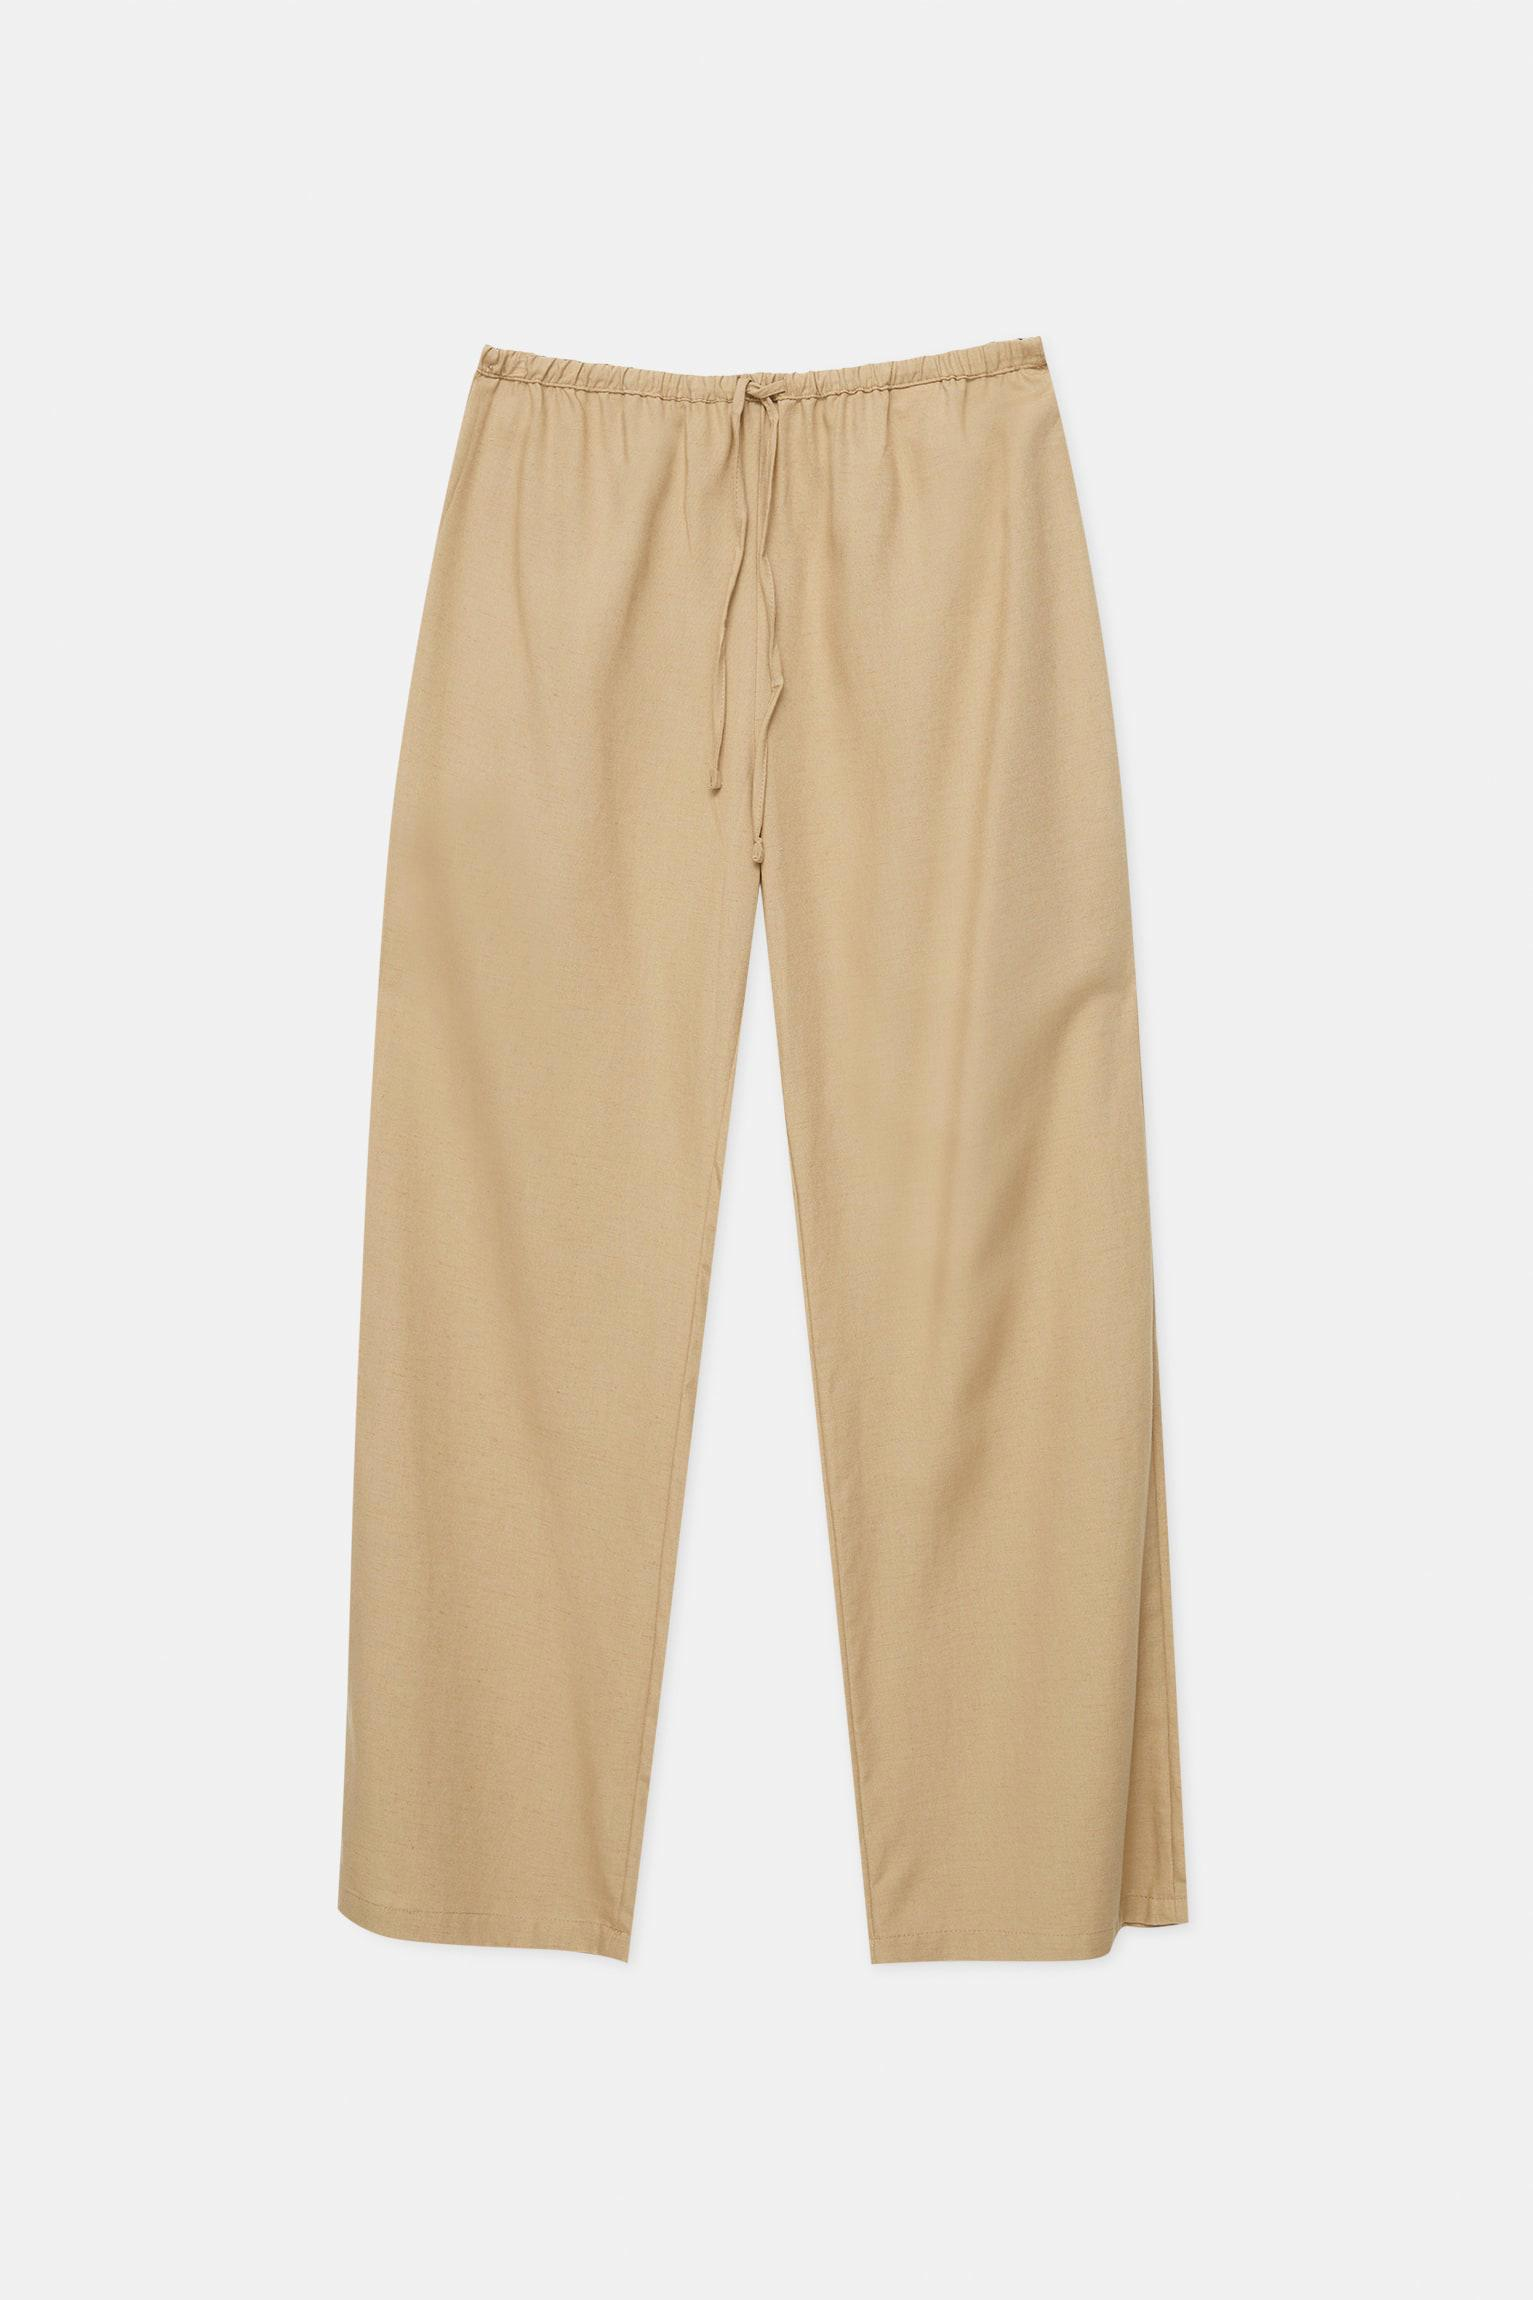 pantalones de cintura elástica de pull and bear tejido rústico 9,99 euros